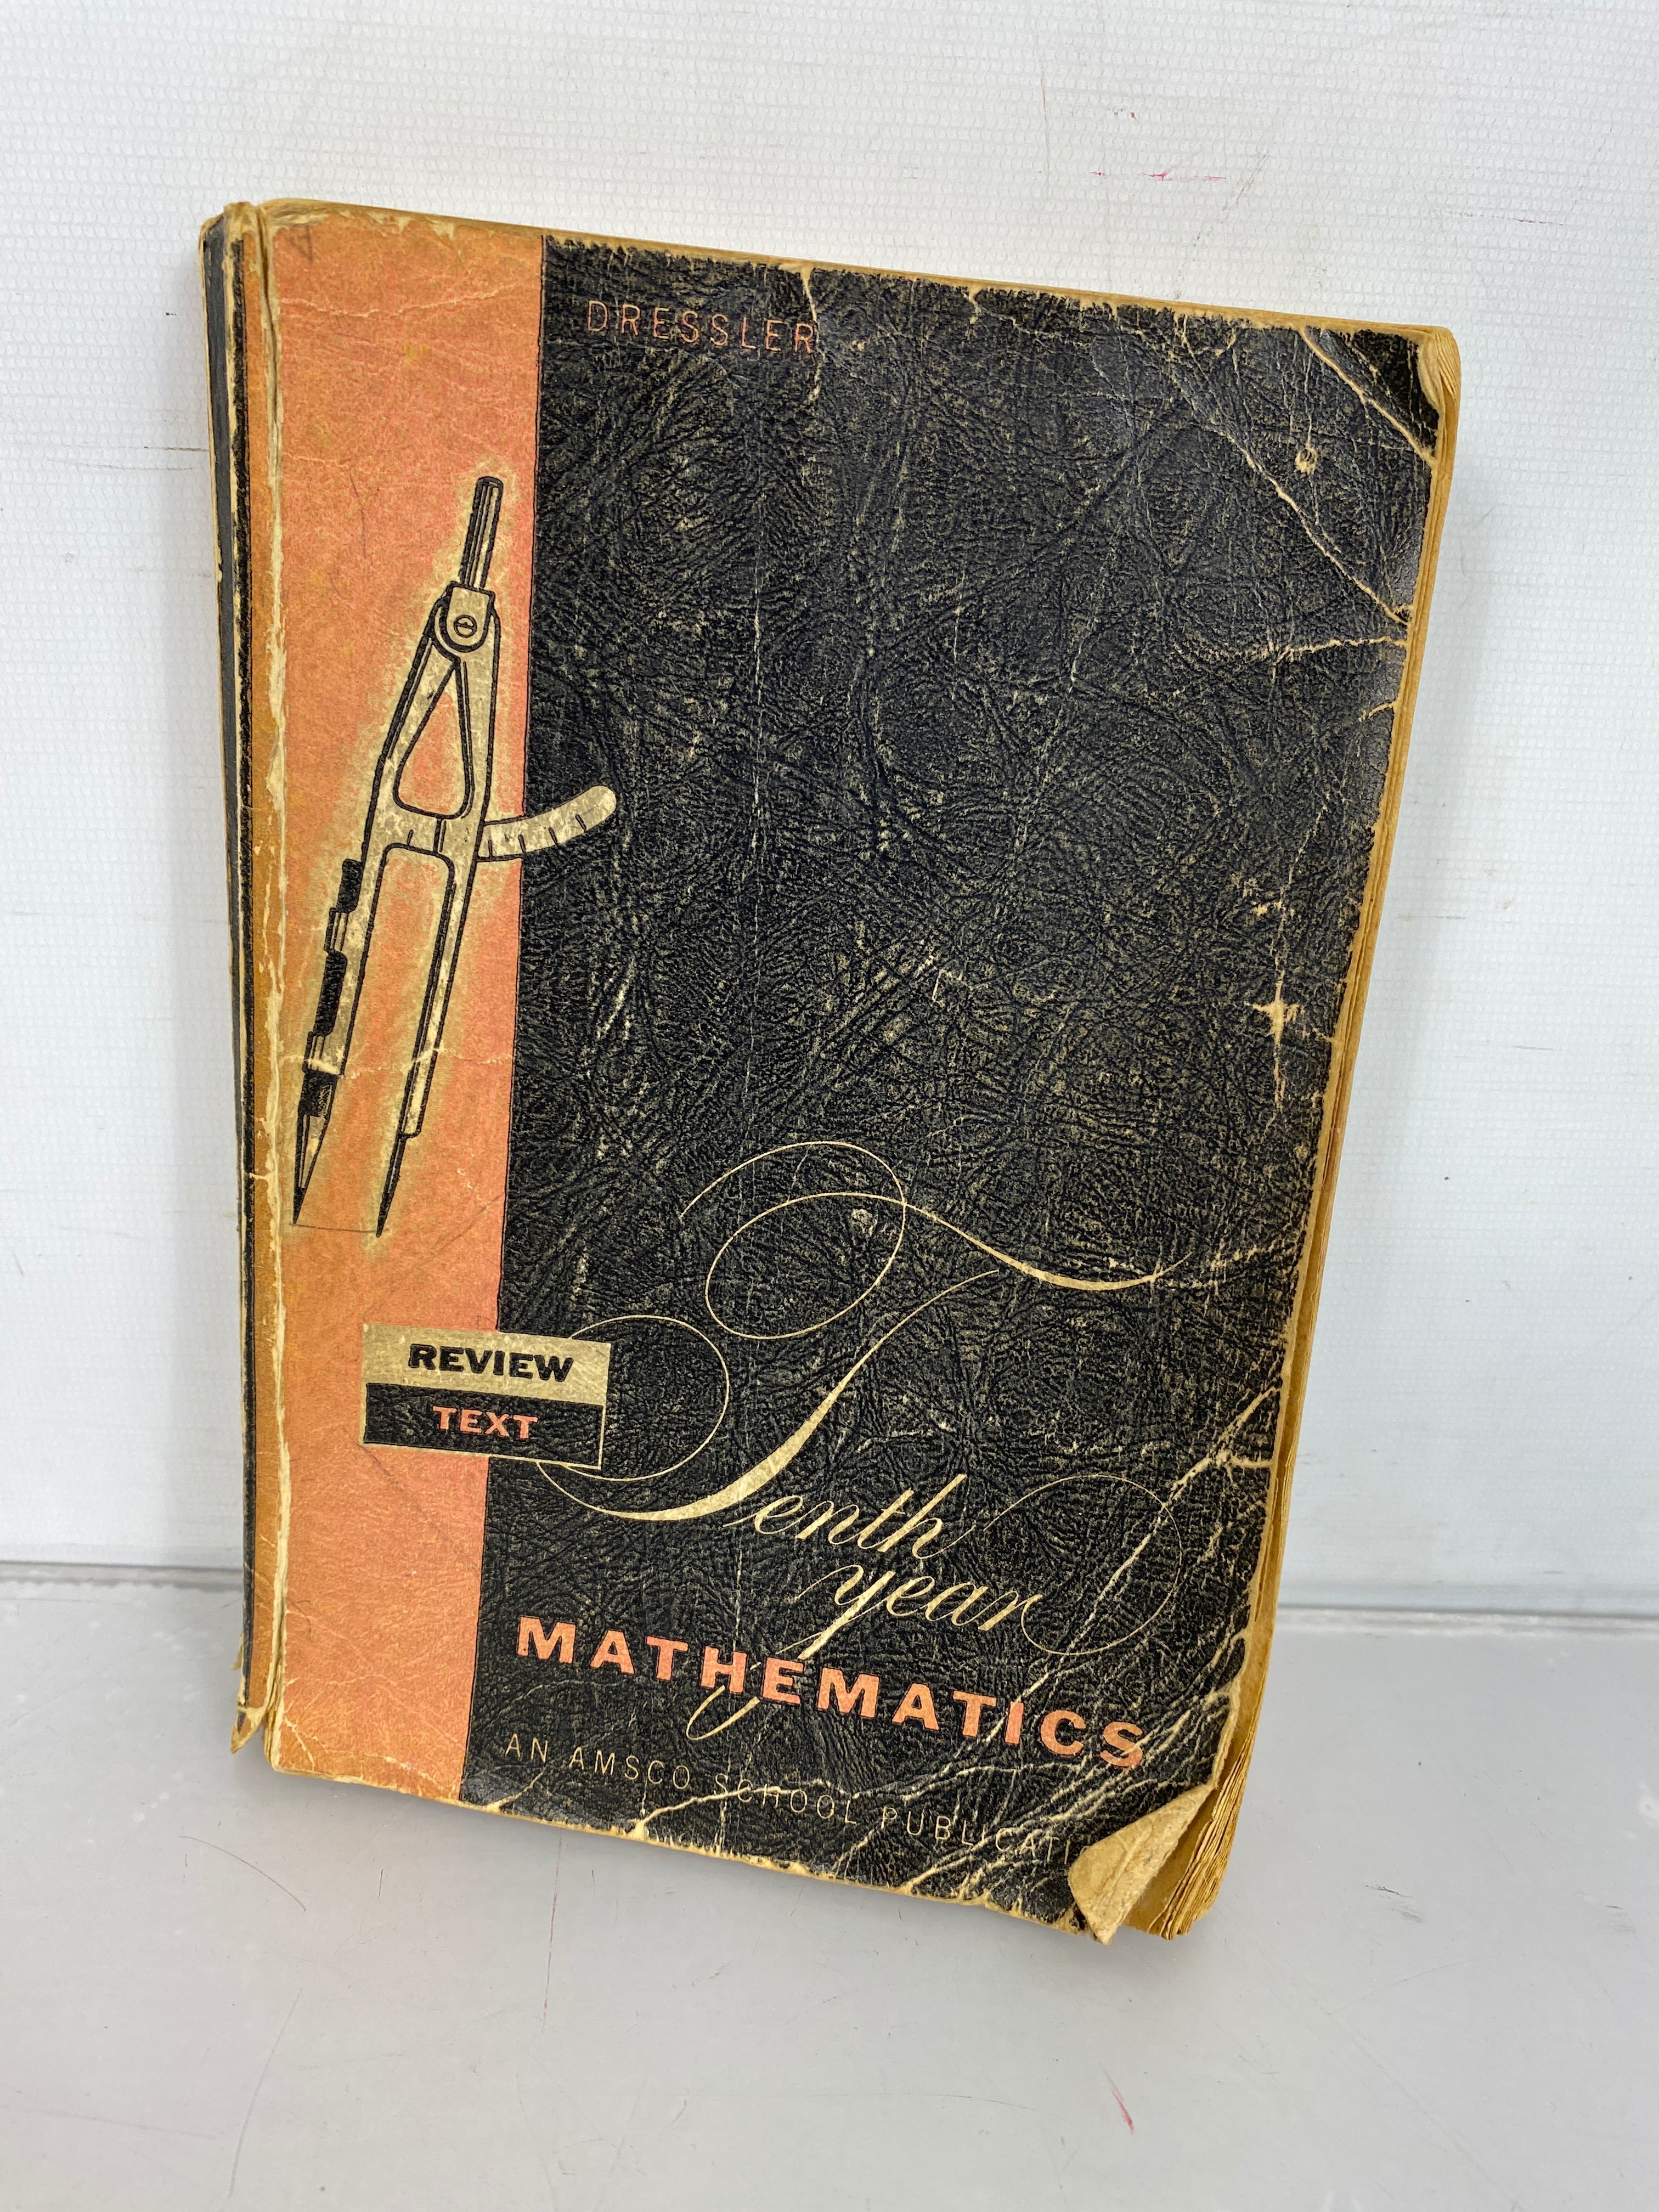 Lot of 2 Amsco School Publications Mathematics Books Reviewing Elementary Algebra and Tenth Year Mathematics 1949 SC